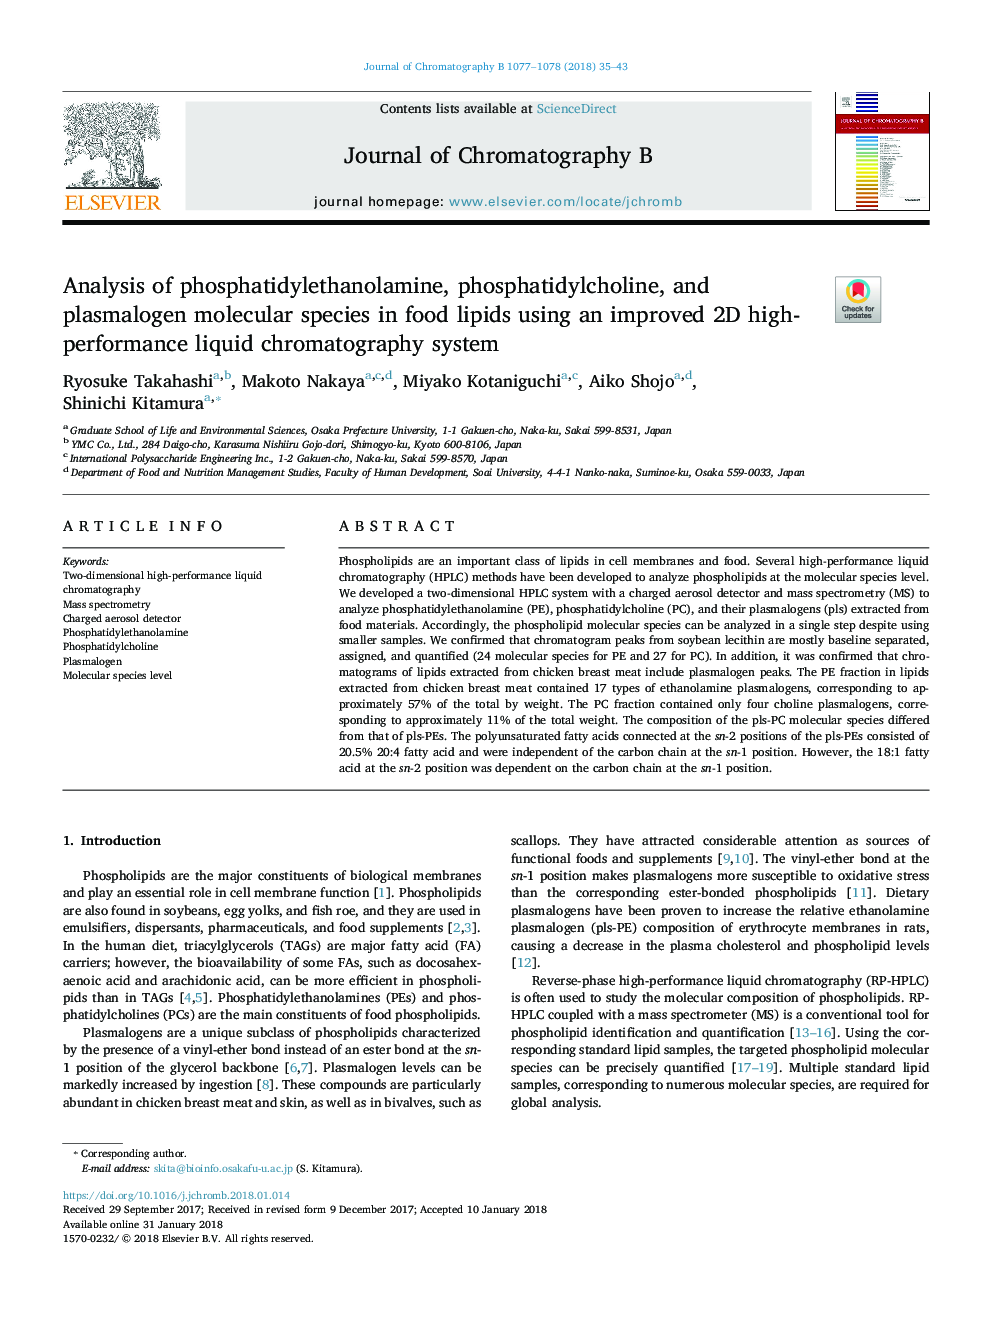 Analysis of phosphatidylethanolamine, phosphatidylcholine, and plasmalogen molecular species in food lipids using an improved 2D high-performance liquid chromatography system